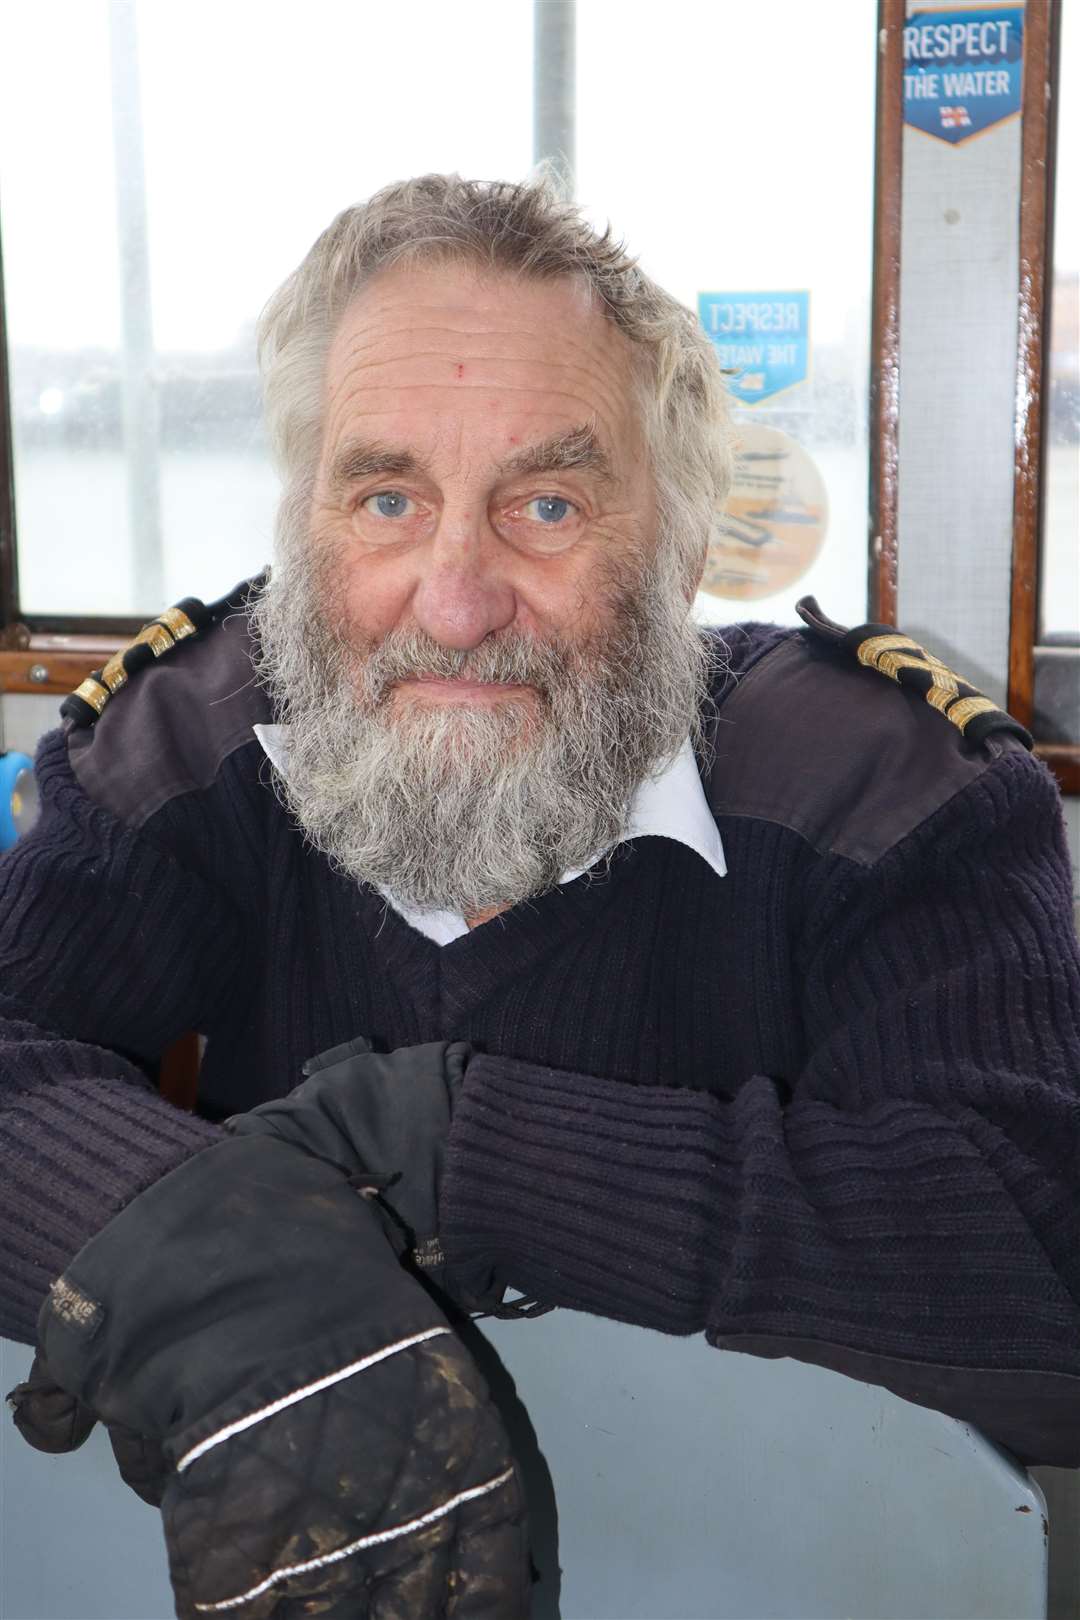 Skipper of the X-Pilot Capt Alan Harmer, 74